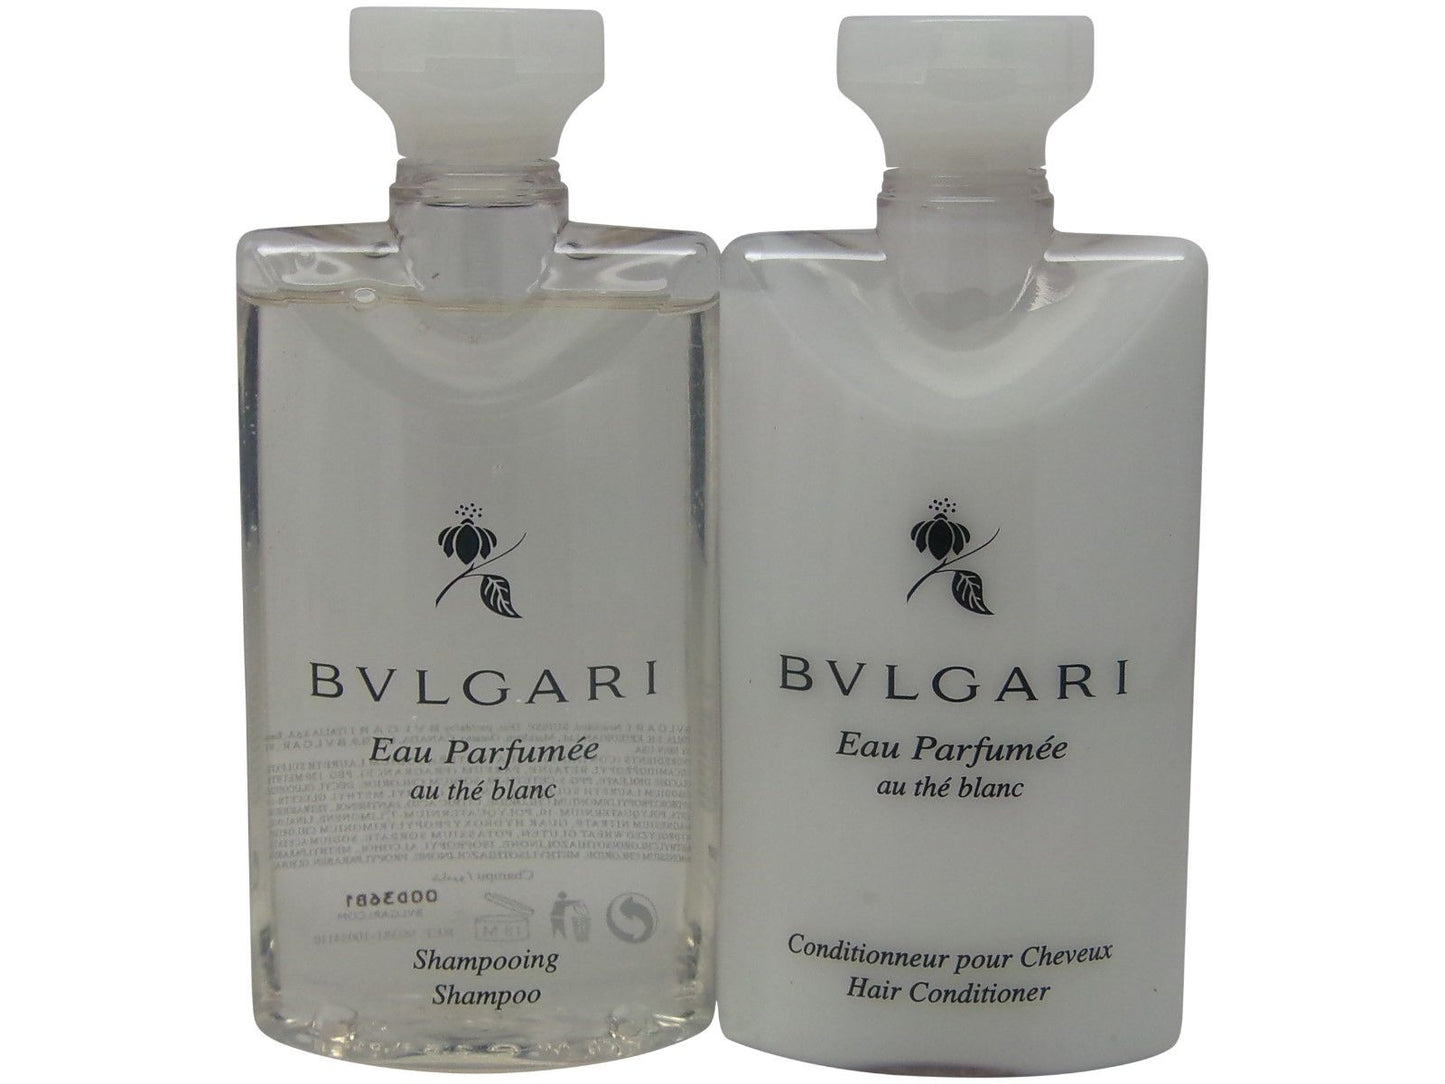 Bvlgari White Tea au the blanc Shampoo & Conditioner lot of 4 (2 of each)